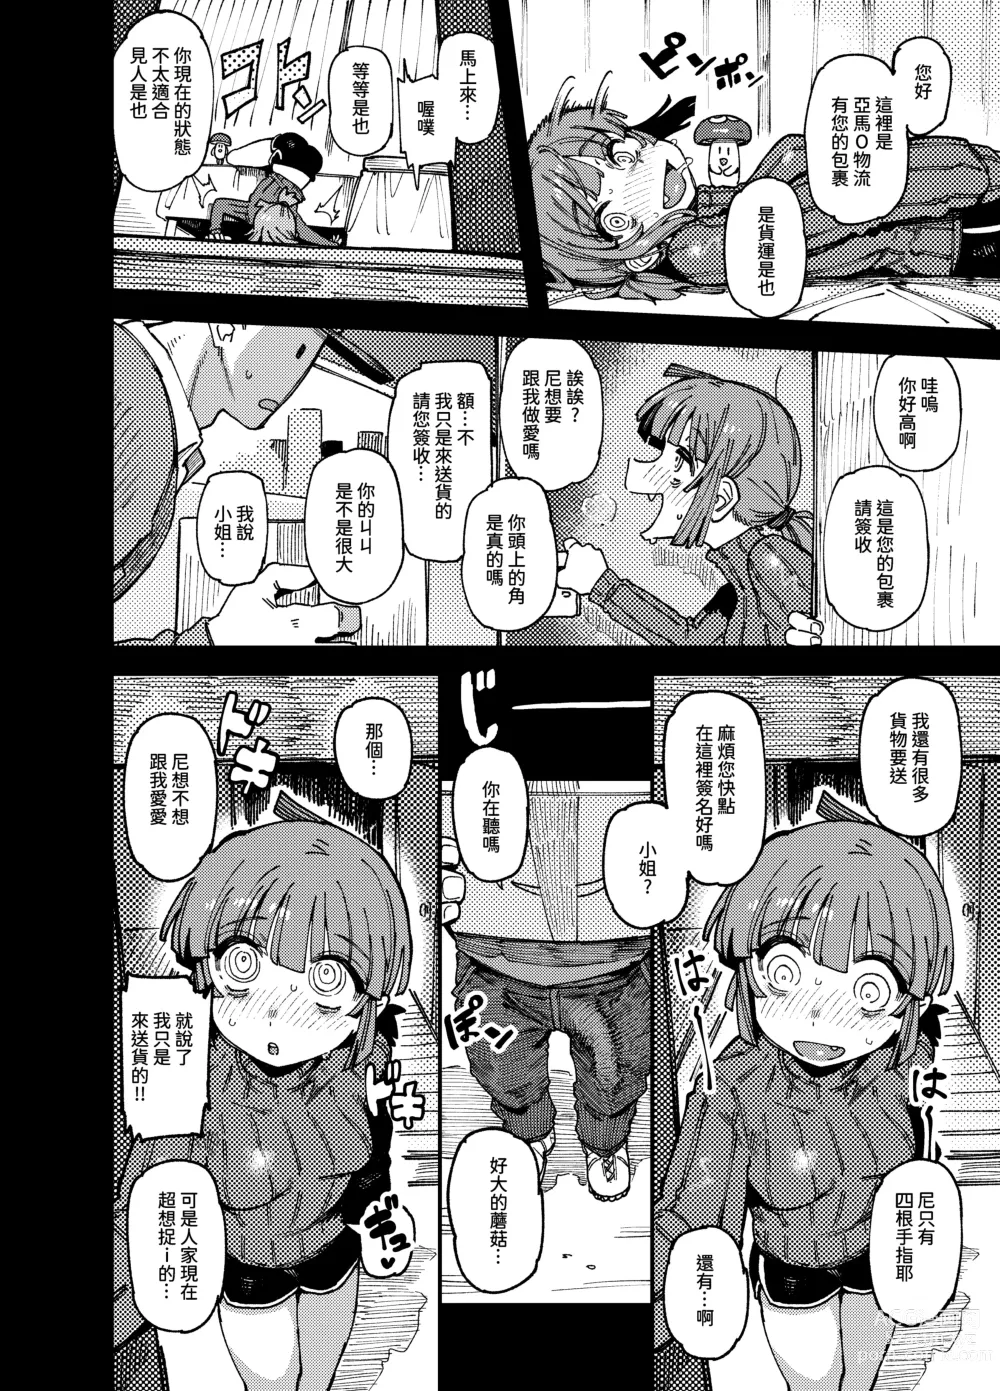 Page 9 of doujinshi 家裡過於潮濕長出致幻蘑菇意外誤食後發情的那些事